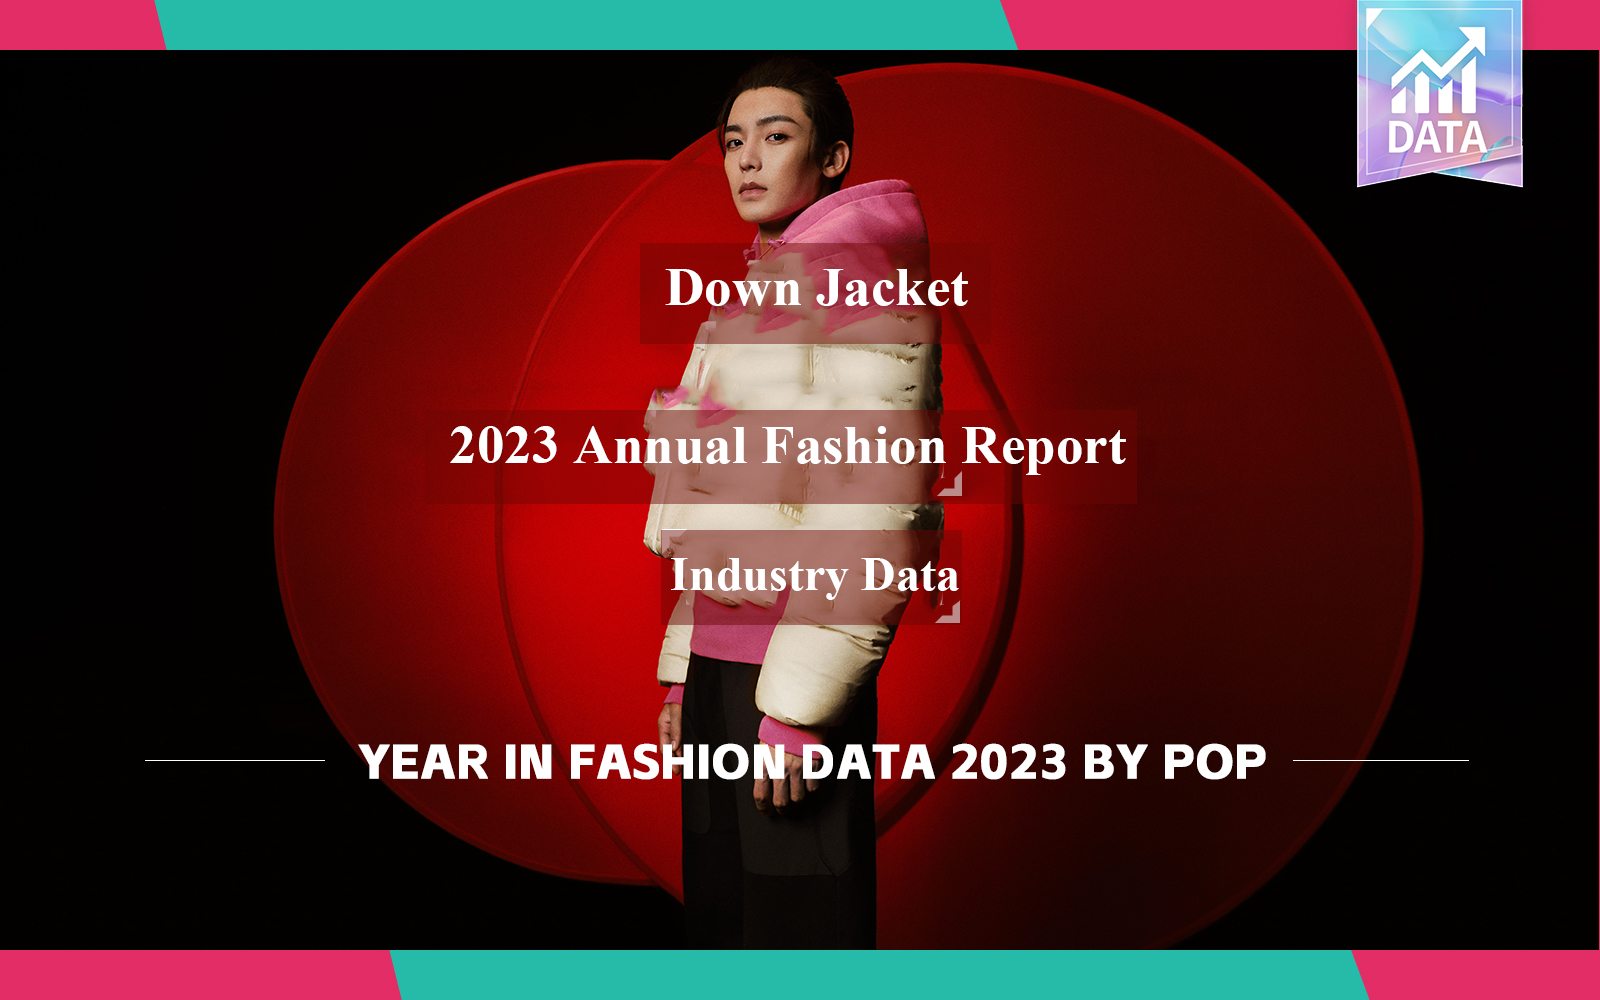 2023 Fashion Data of Down Jacket